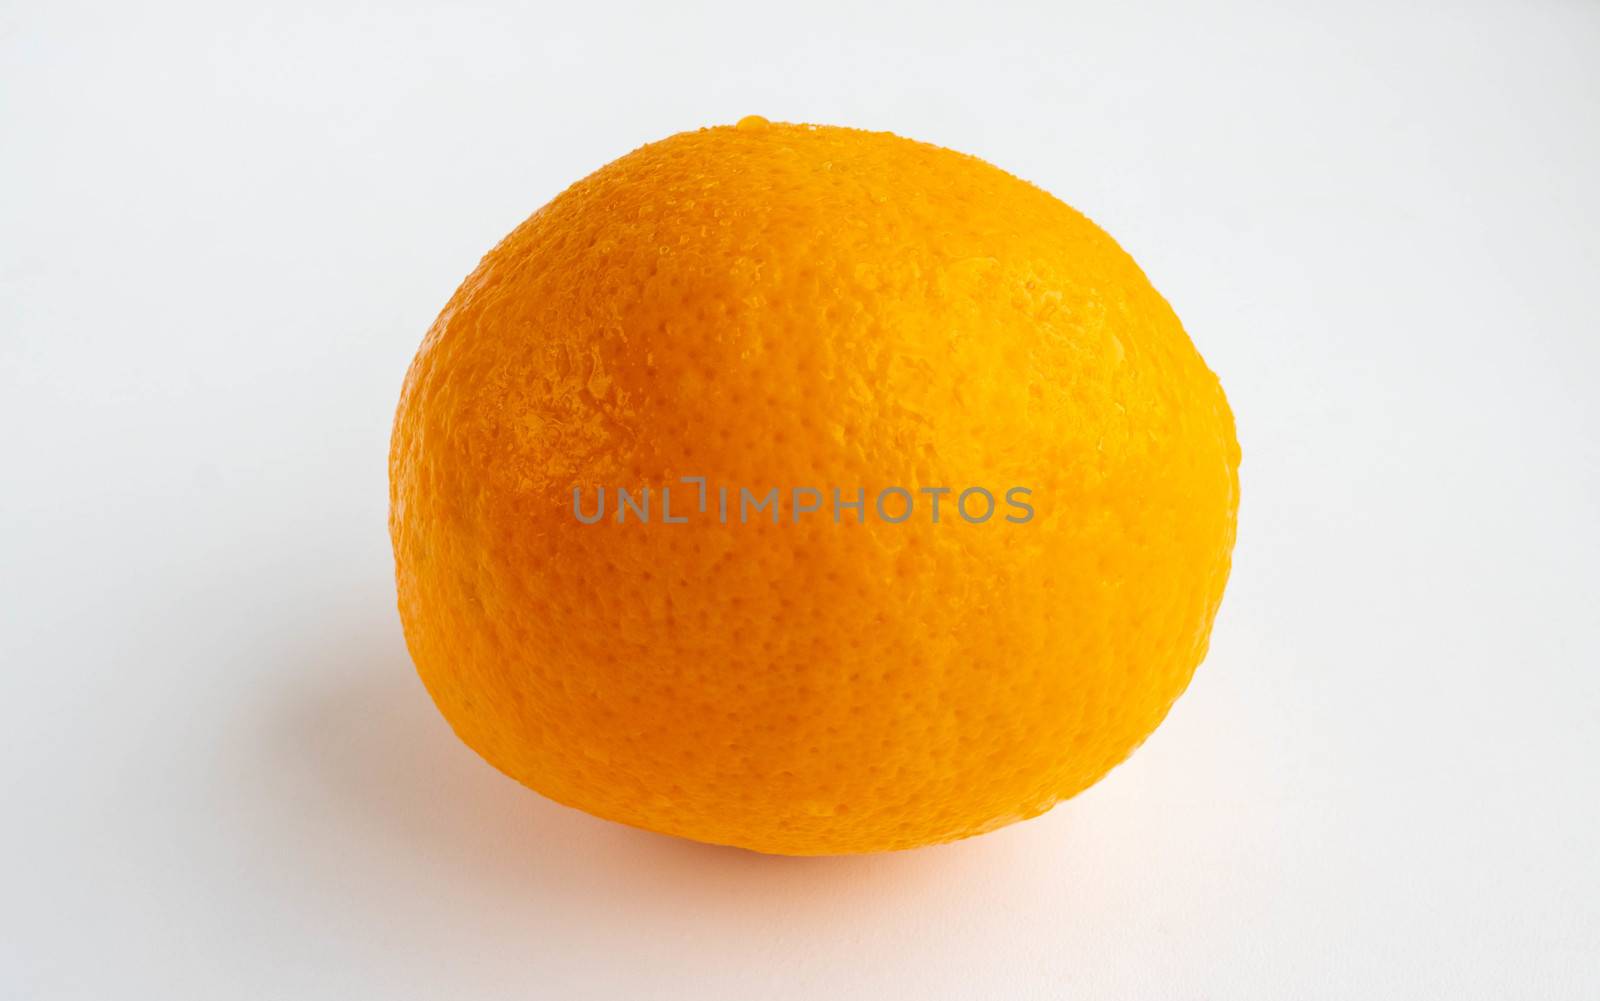 An orange lies on a white background. Harvest by lapushka62